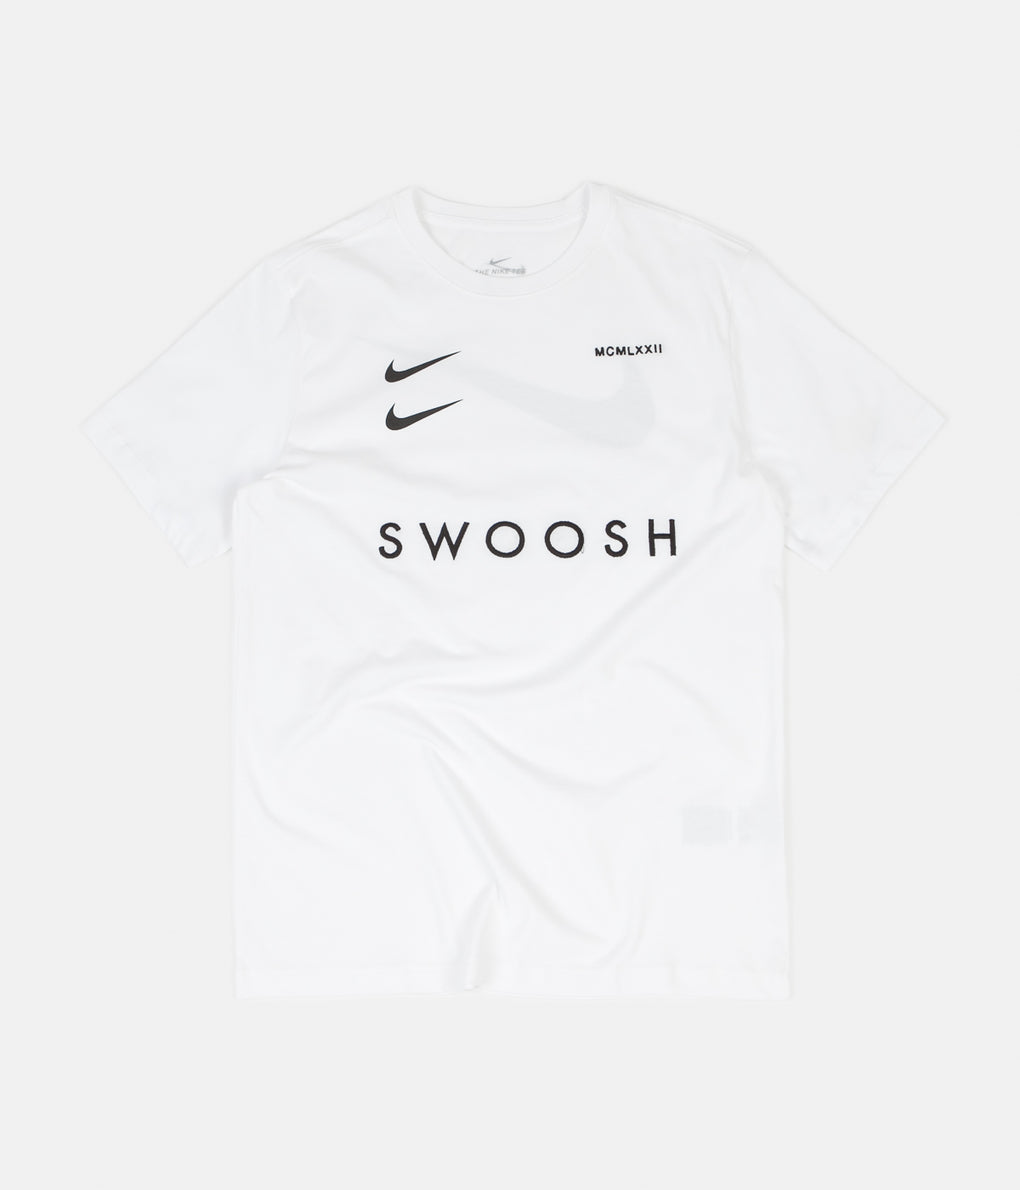 swoosh t shirt